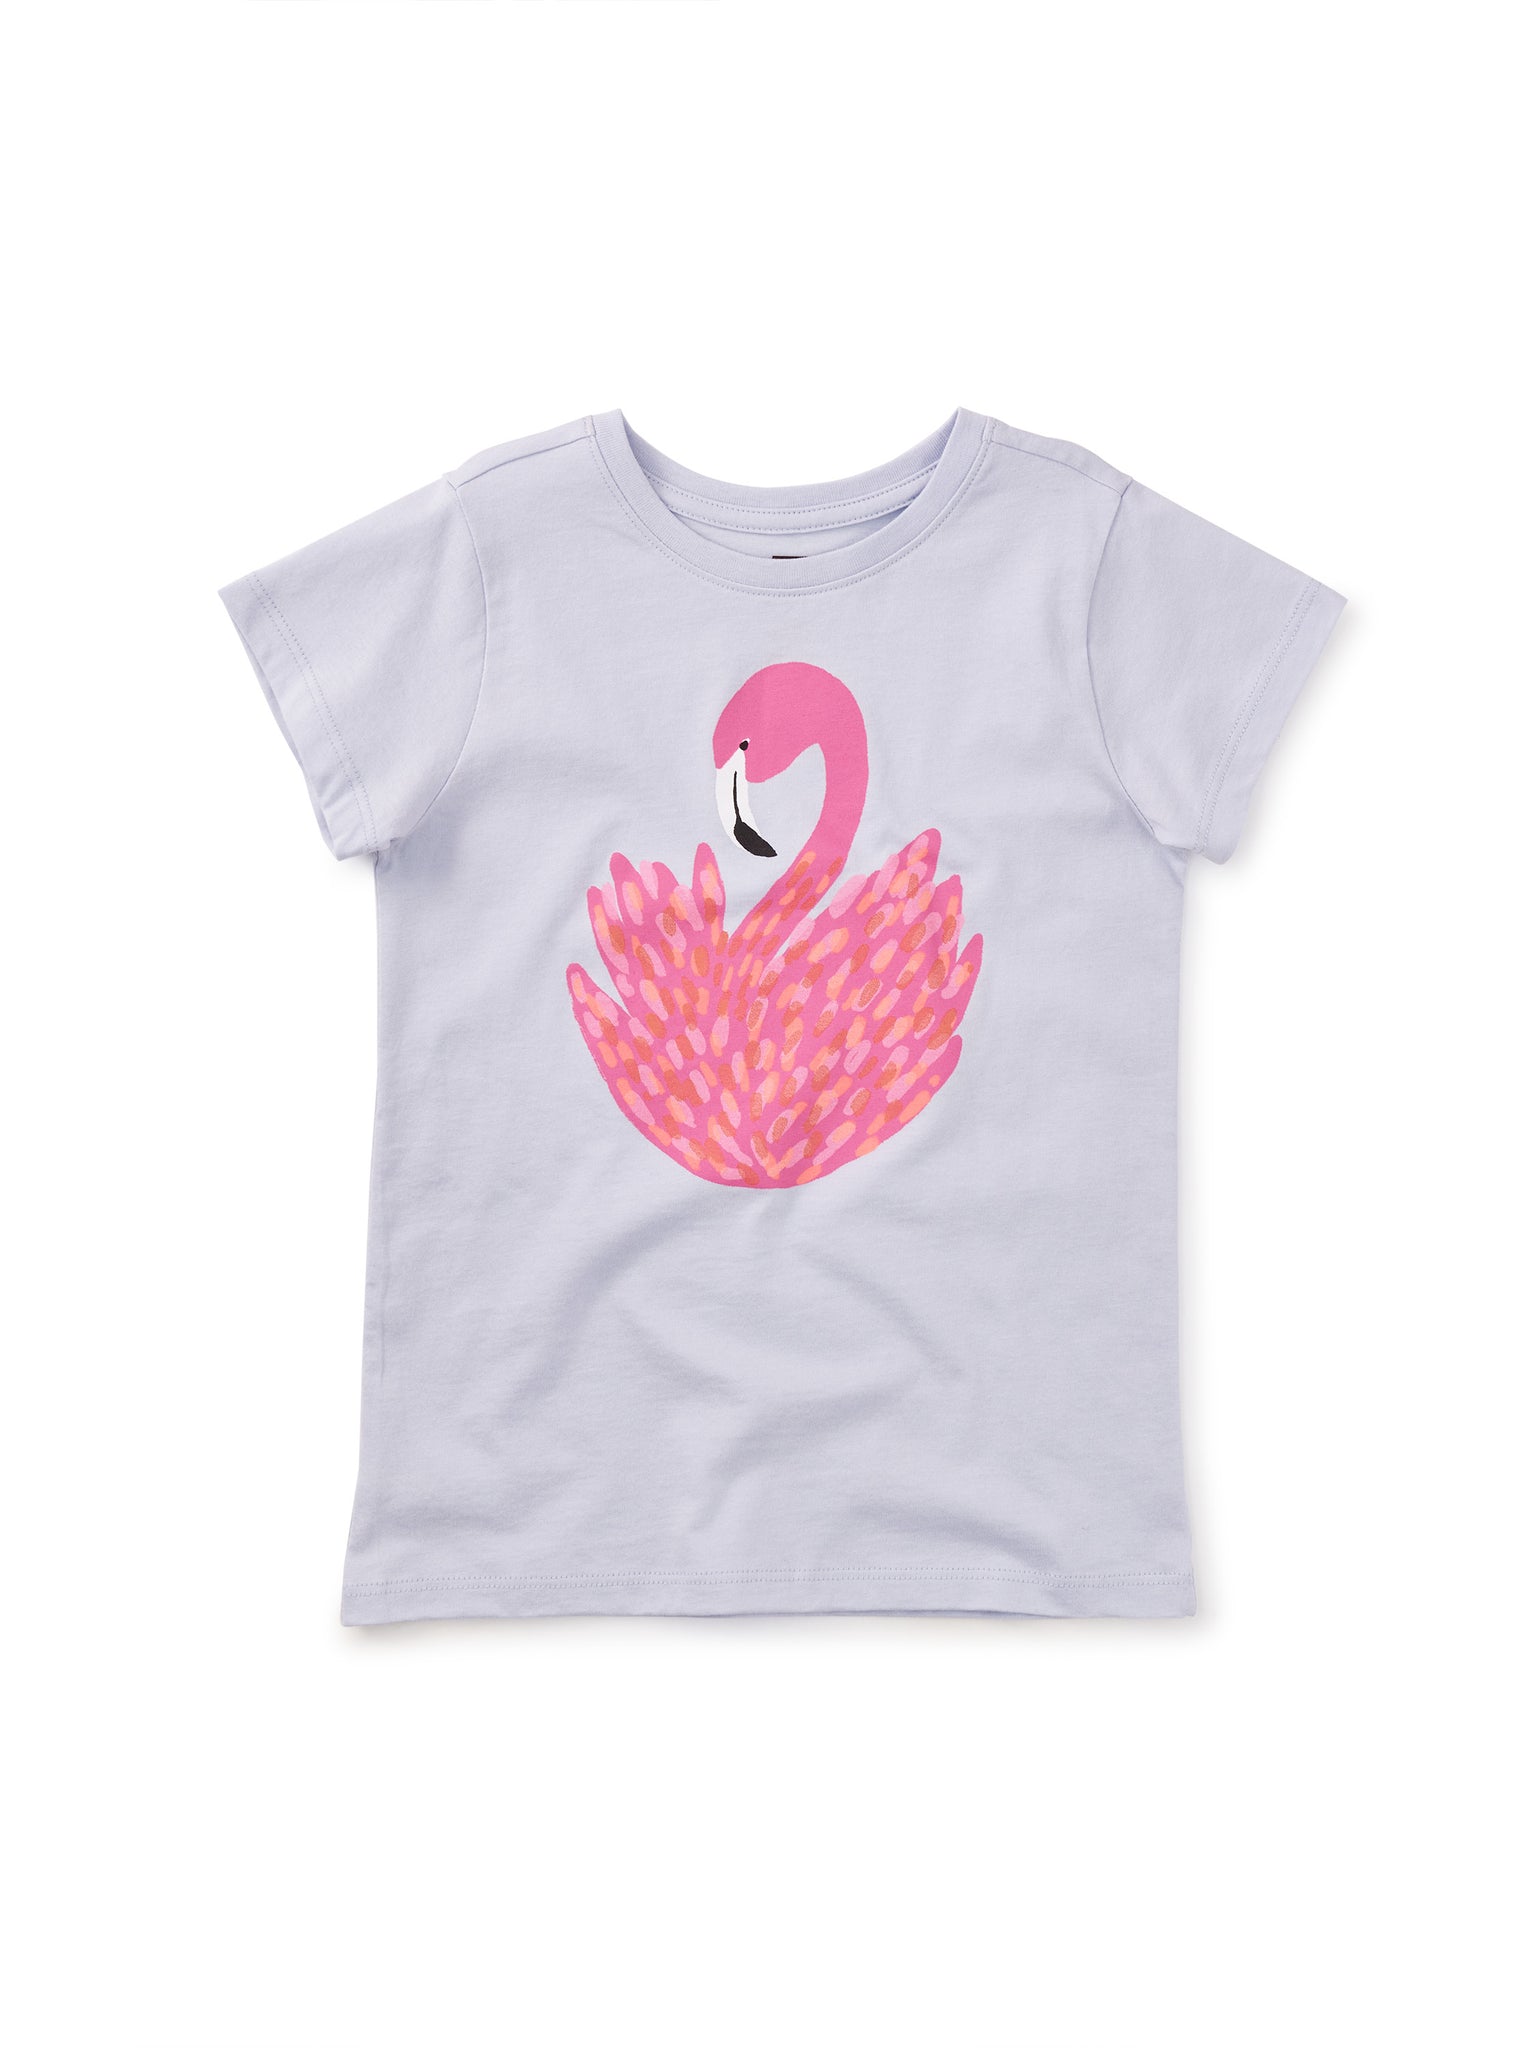 Girls Graphic Tee - Flamingo